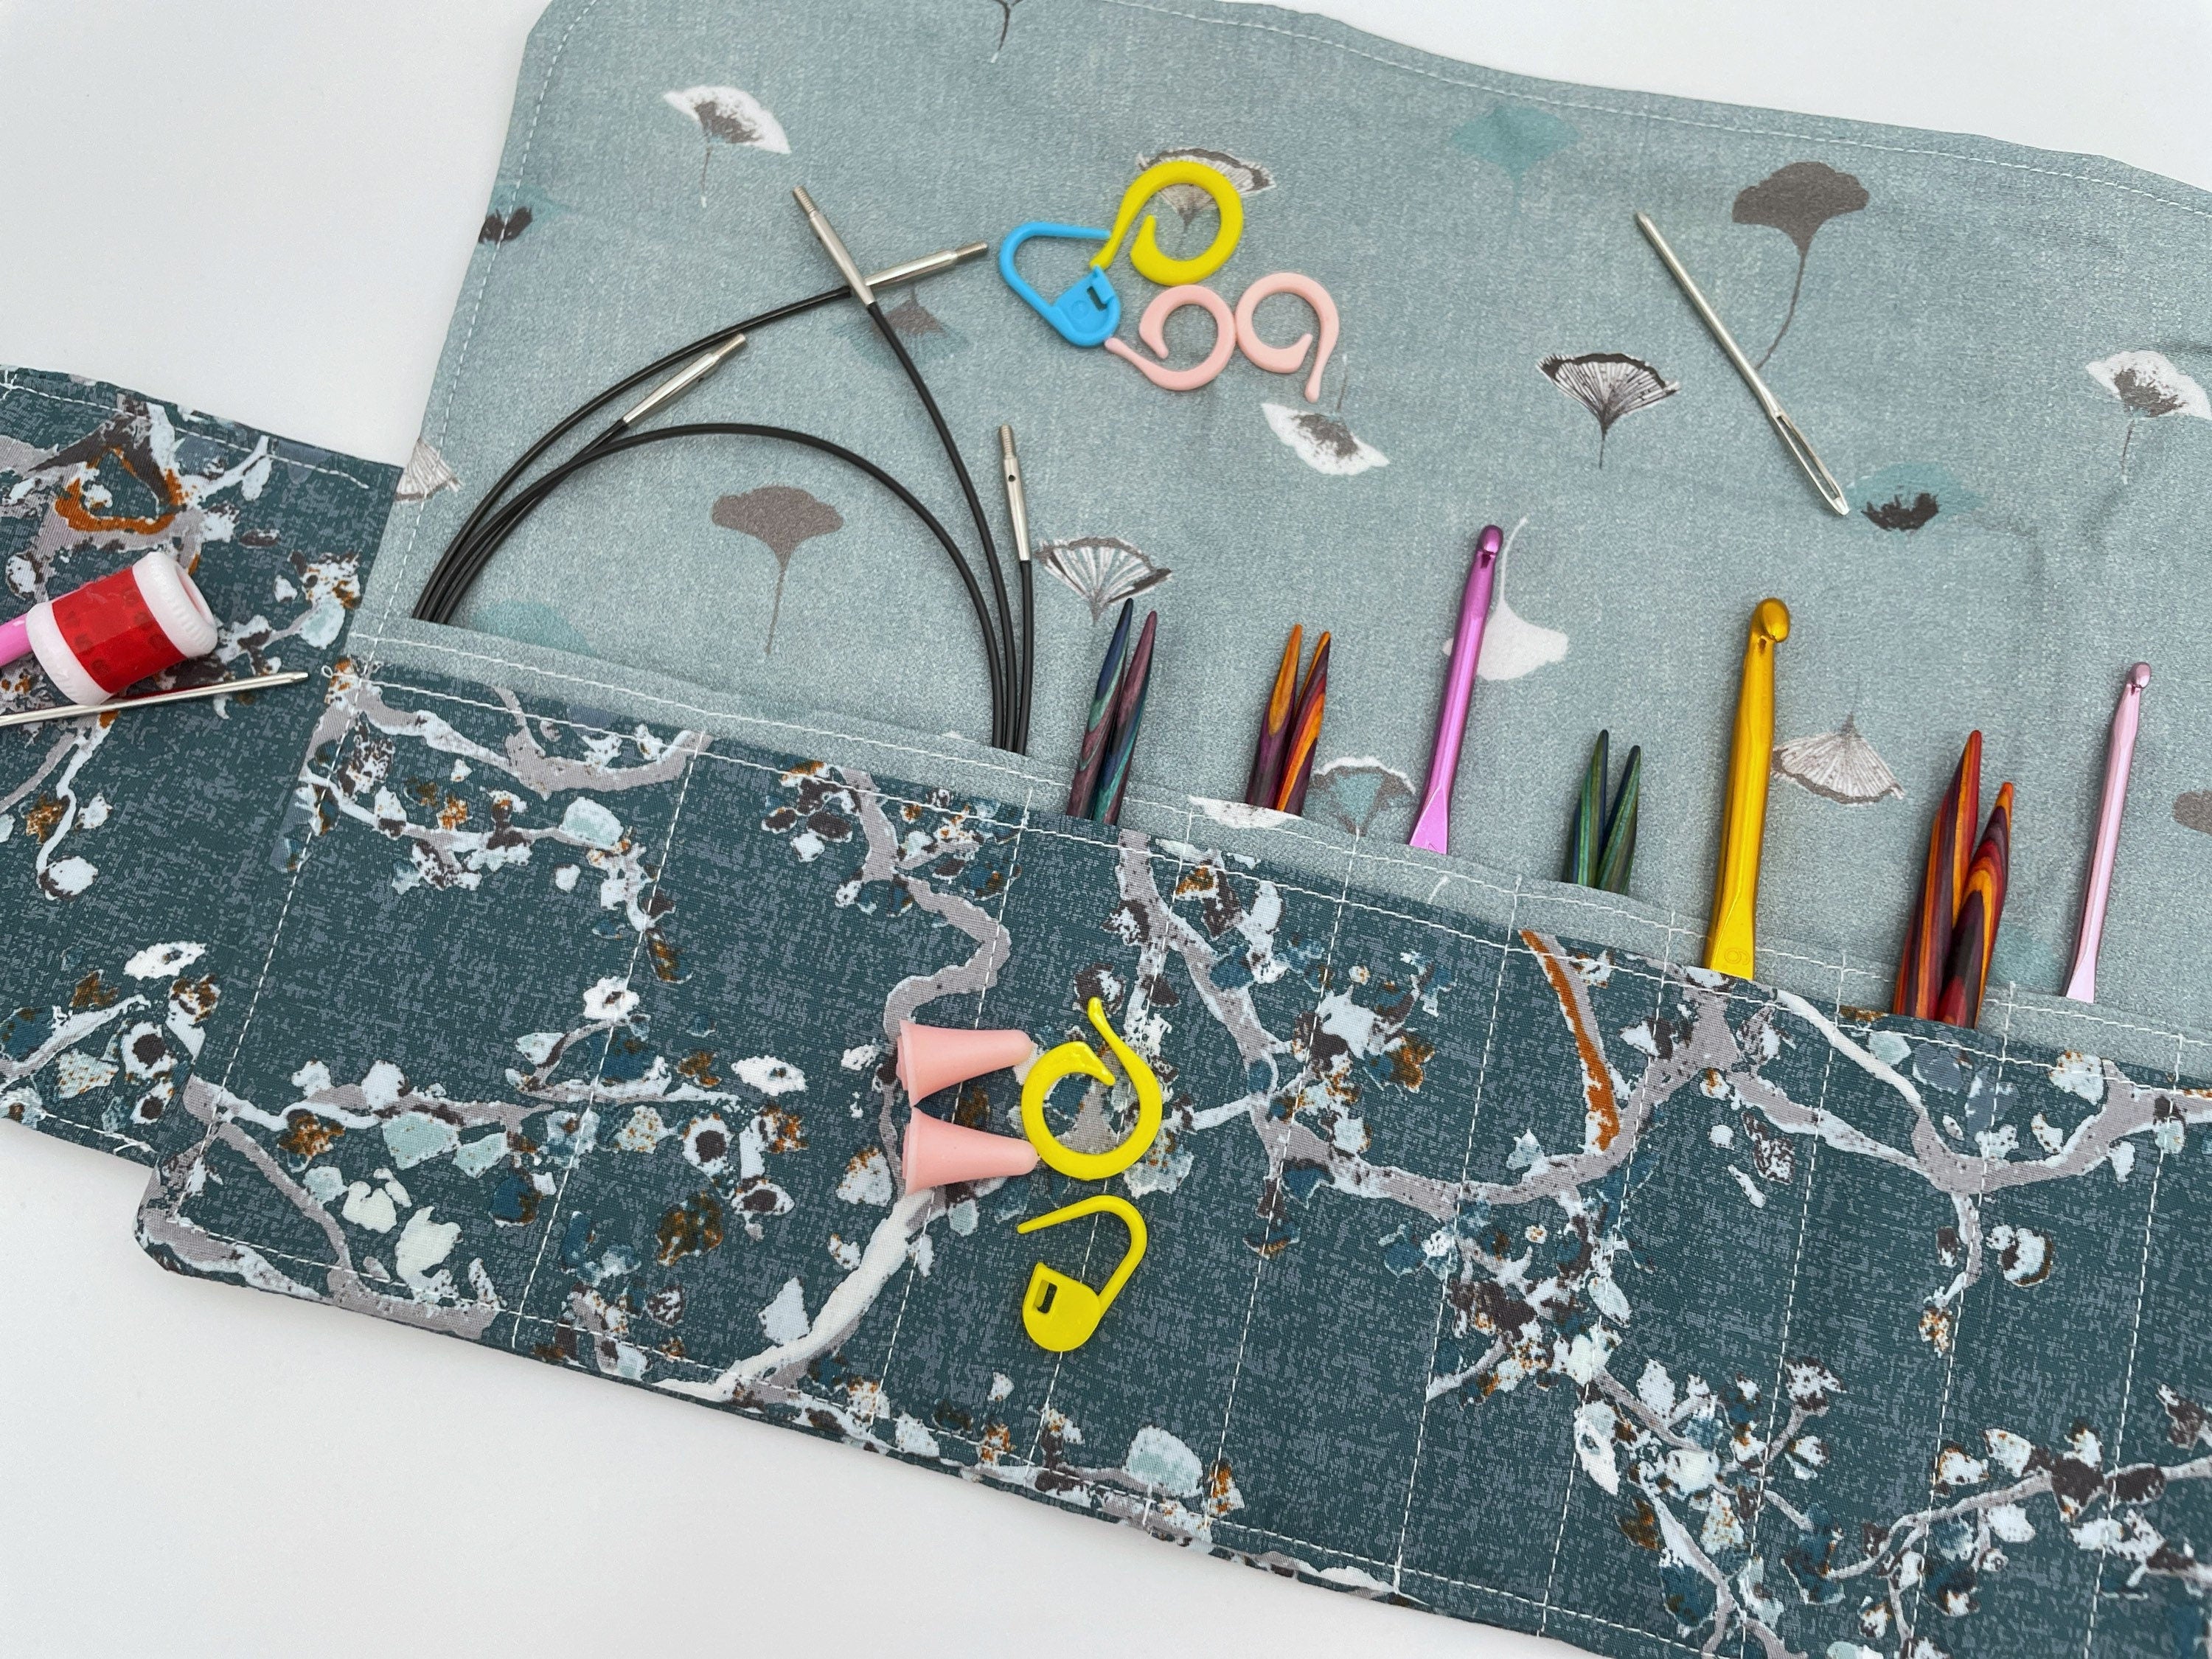 Yazzii Knitting Needles Case - Travel Organizer for Knitting Needles -  Rolling Organizer Case Navy